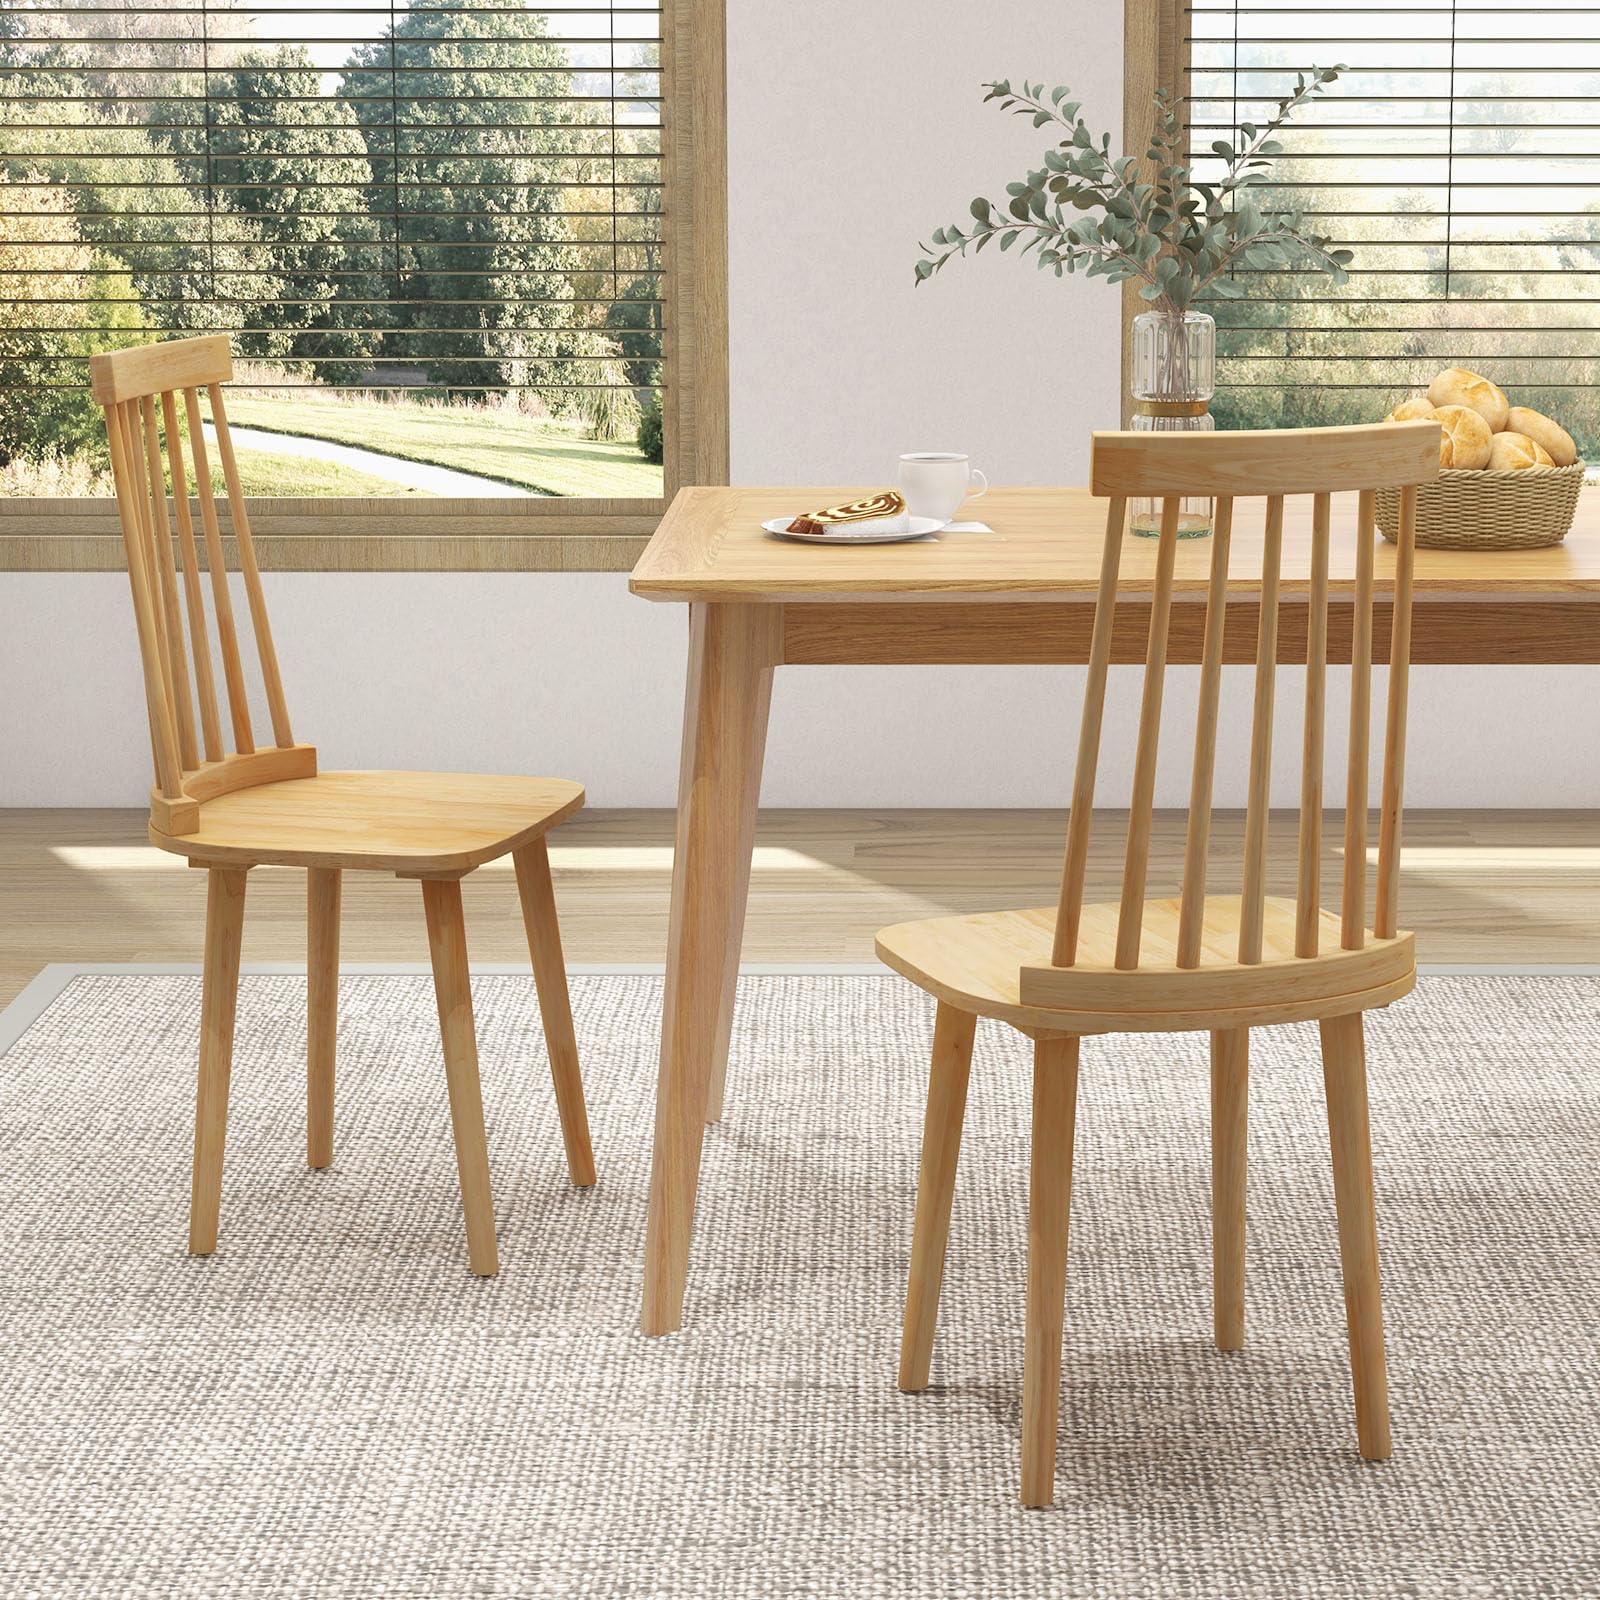 Giantex Windsor Dining Chairs Set